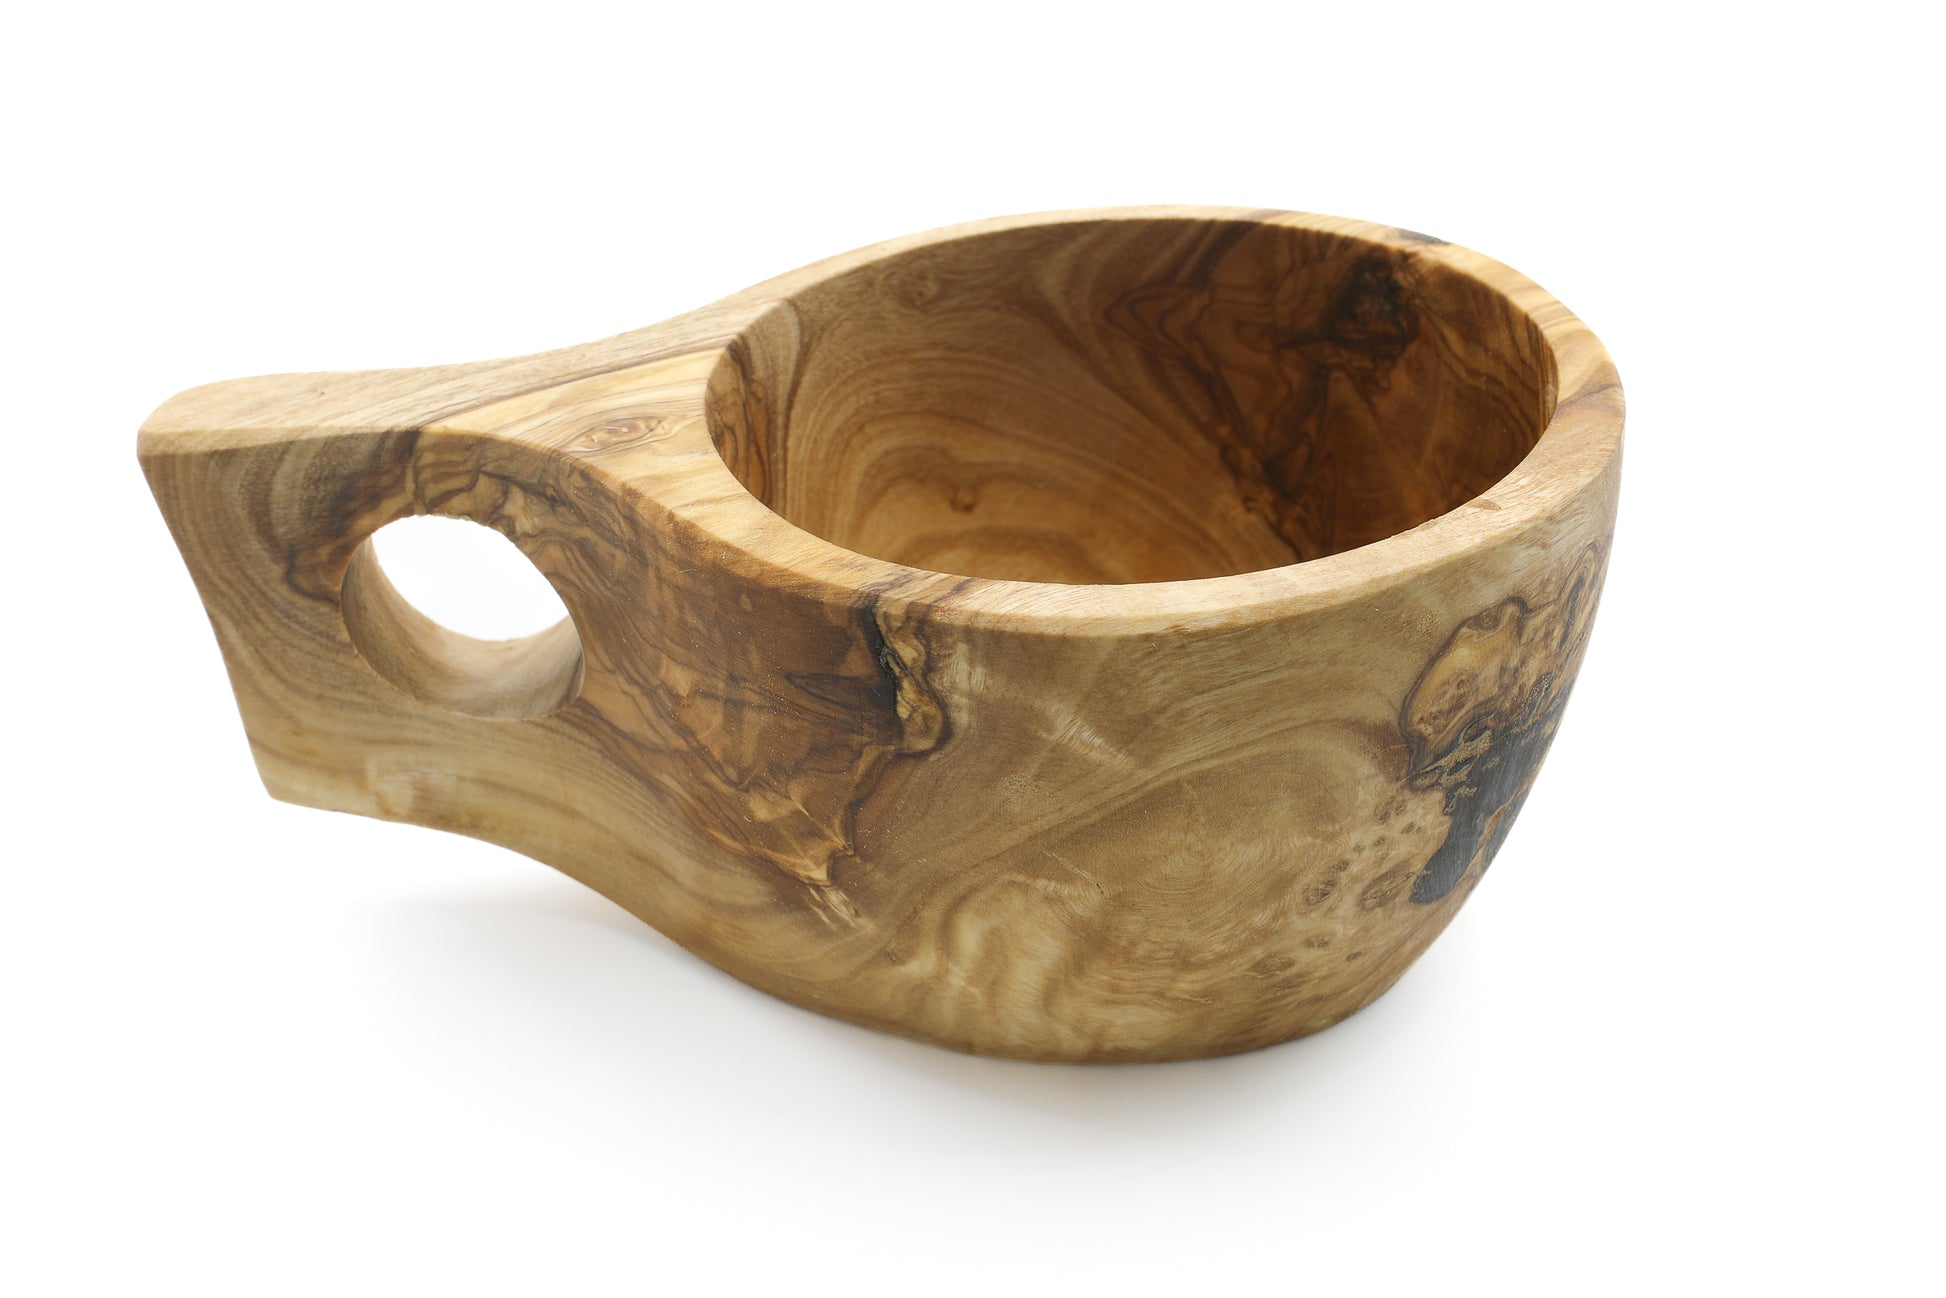 Artisan-created Scandinavian-inspired wooden mug from olive wood